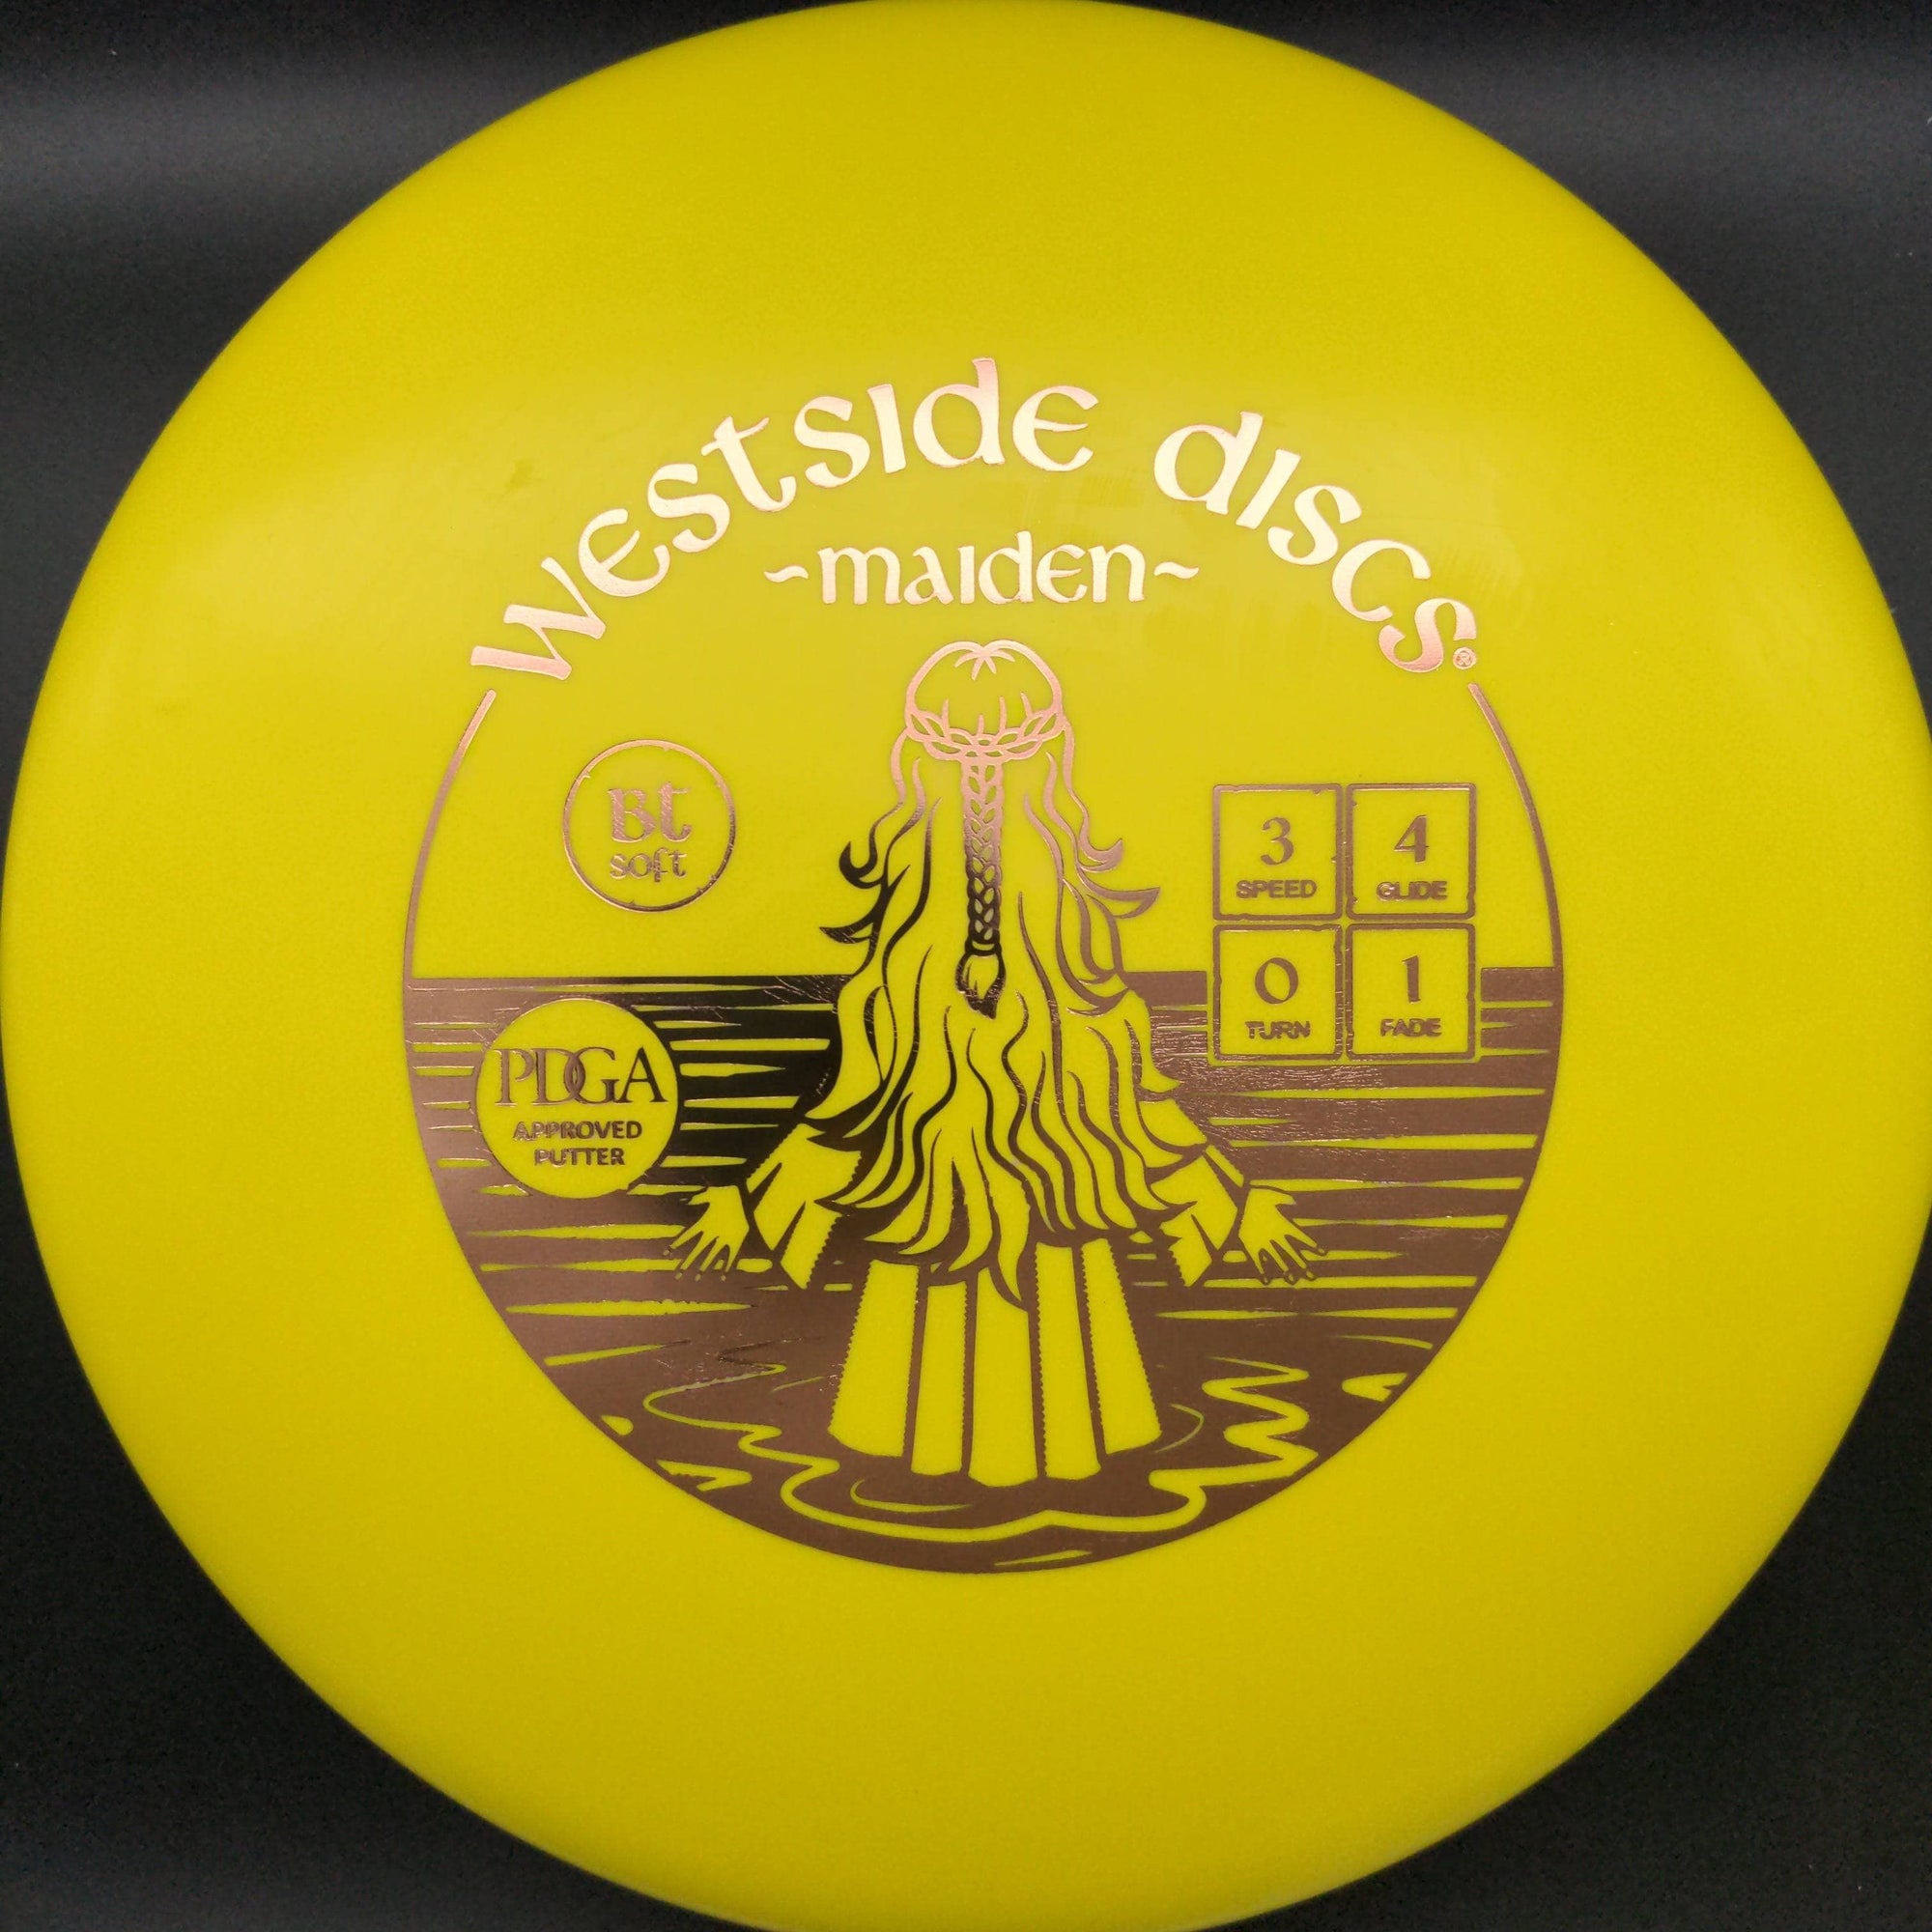 Westside Discs Putter Yellow Lavender Stamp 174g Maiden, BT Soft Plastic